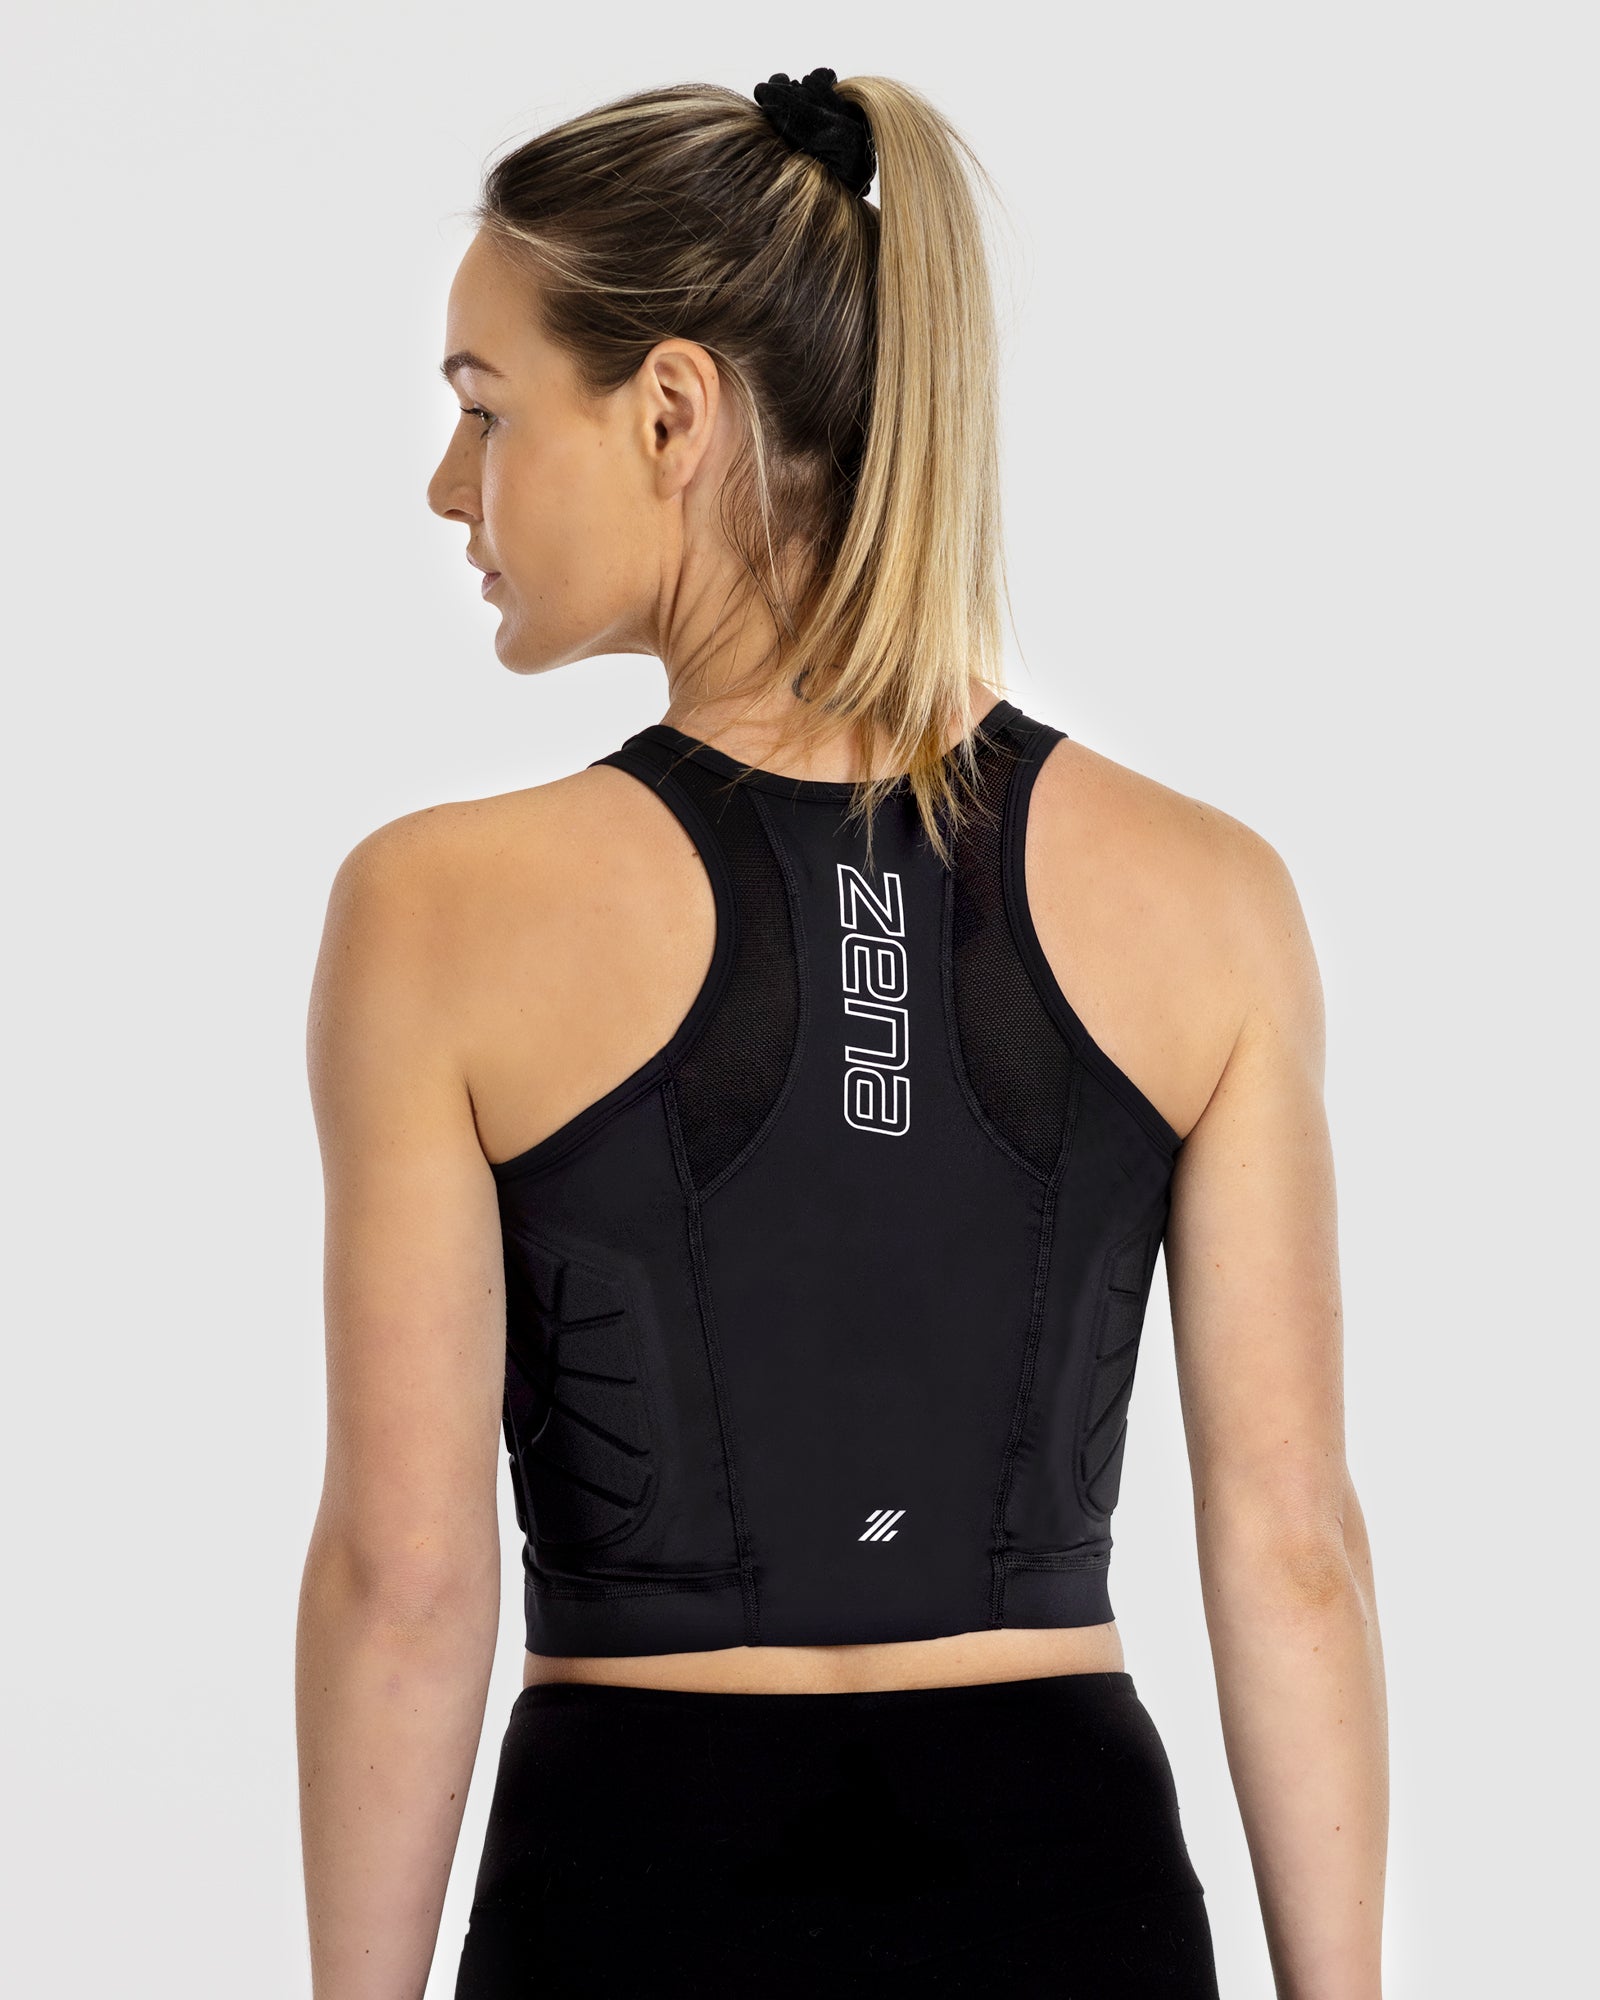 ZENA Sport - Female impact protection Vest – Zena Au